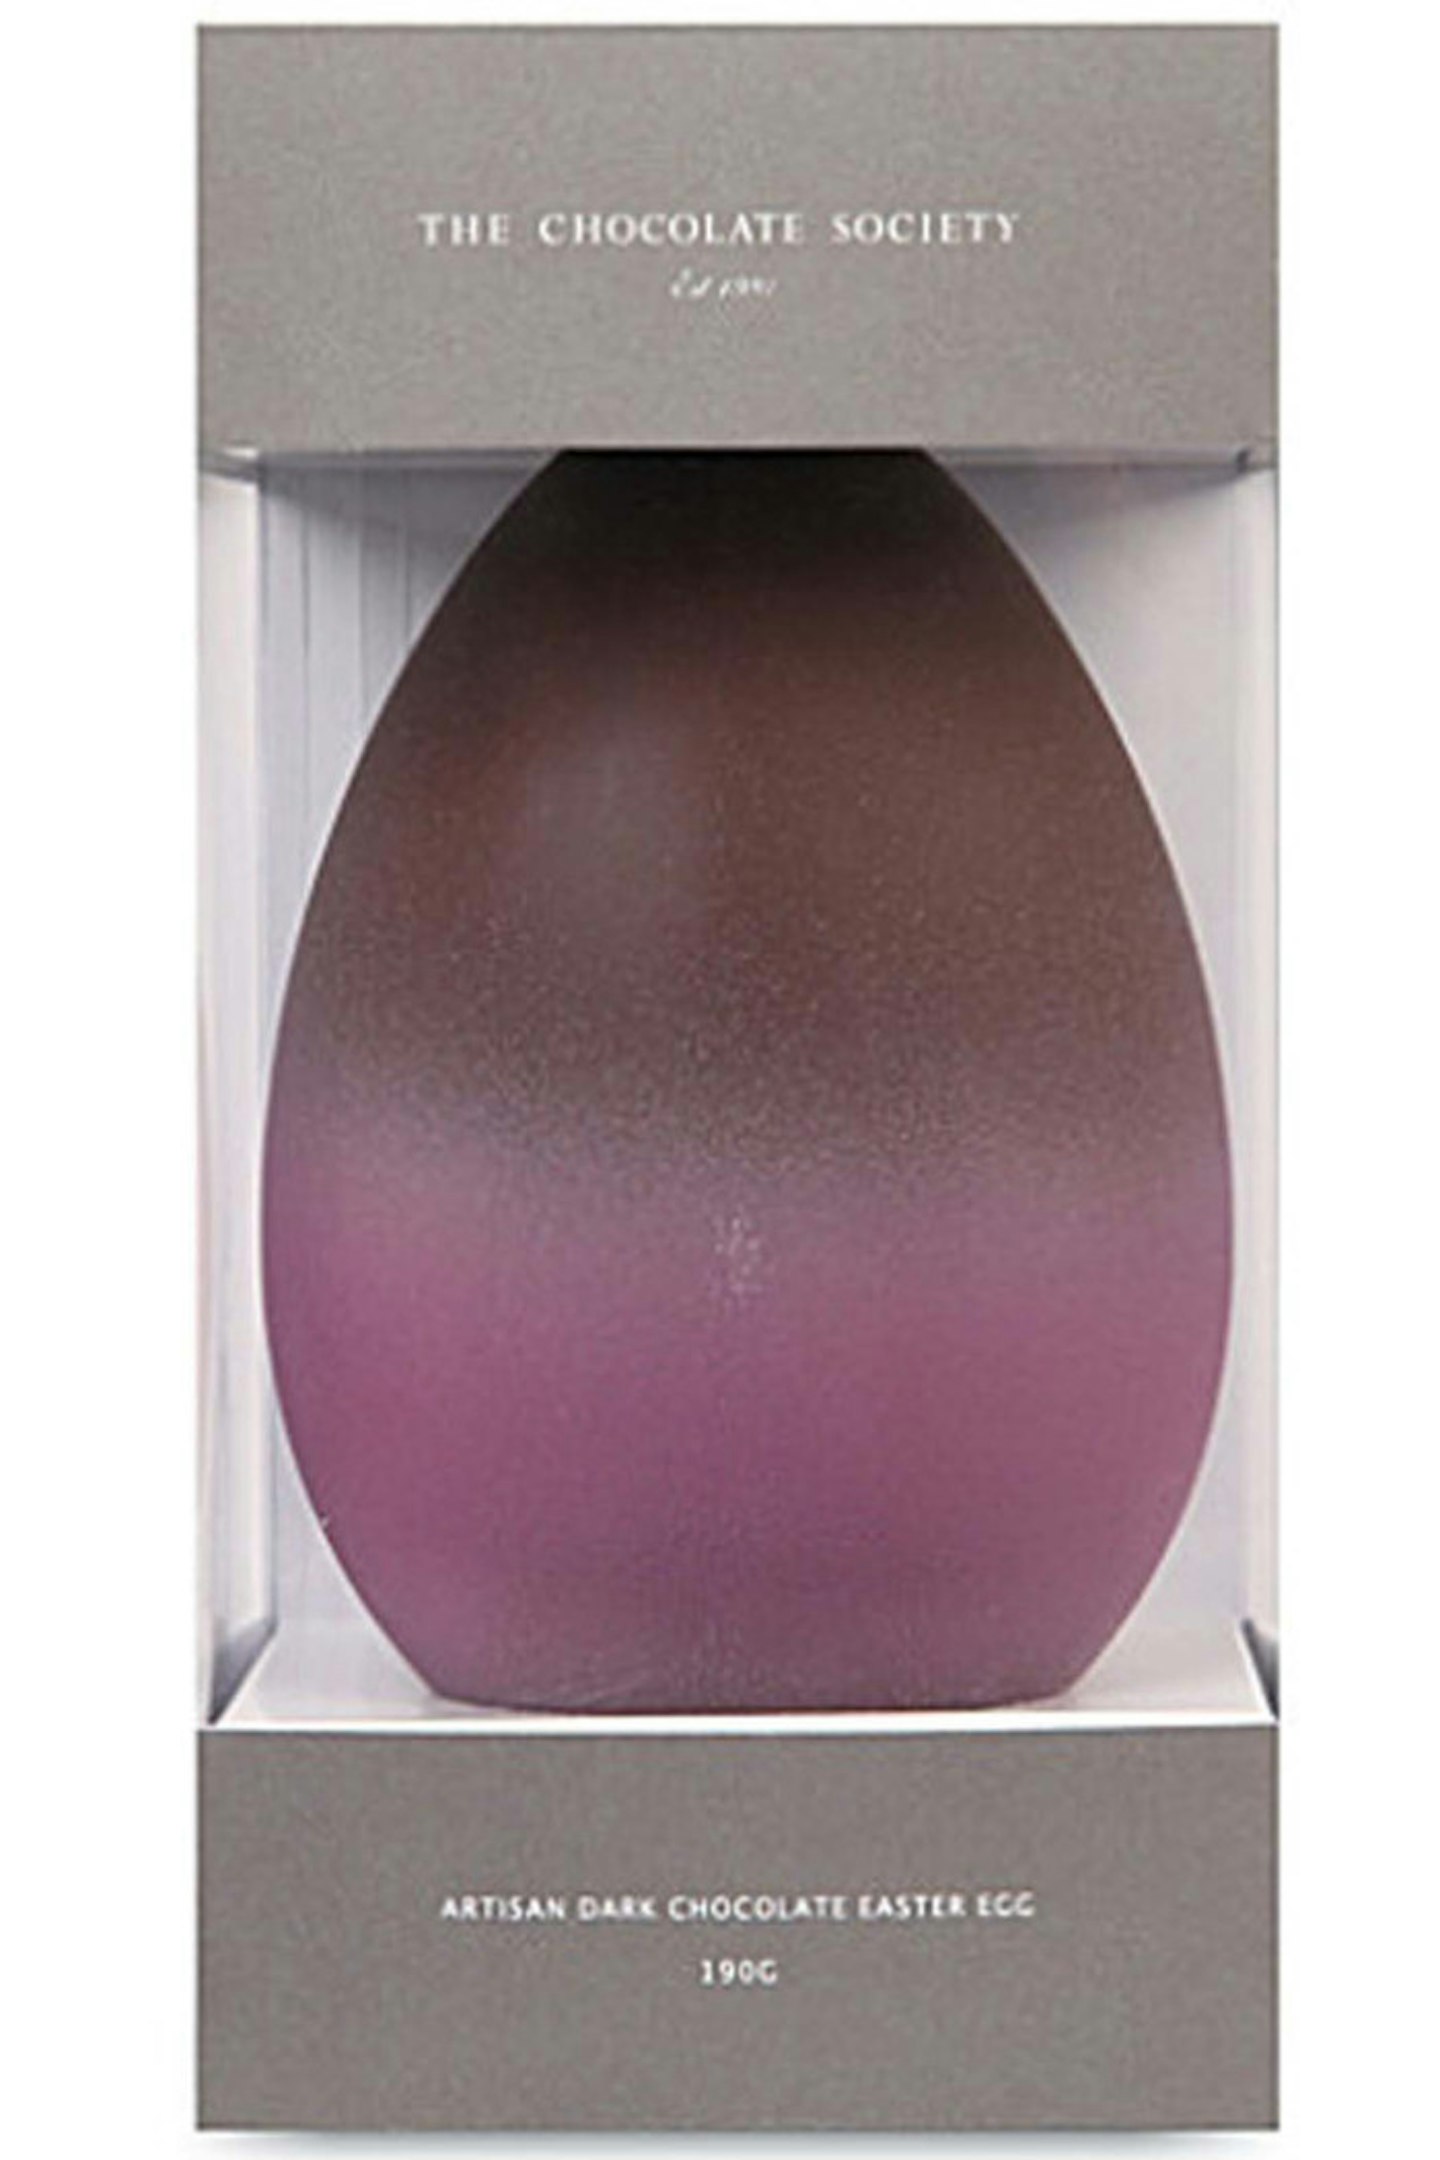 THE CHOCOLATE SOCIETY Ombre purple dark chocolate egg 190g £24.99 selfridges